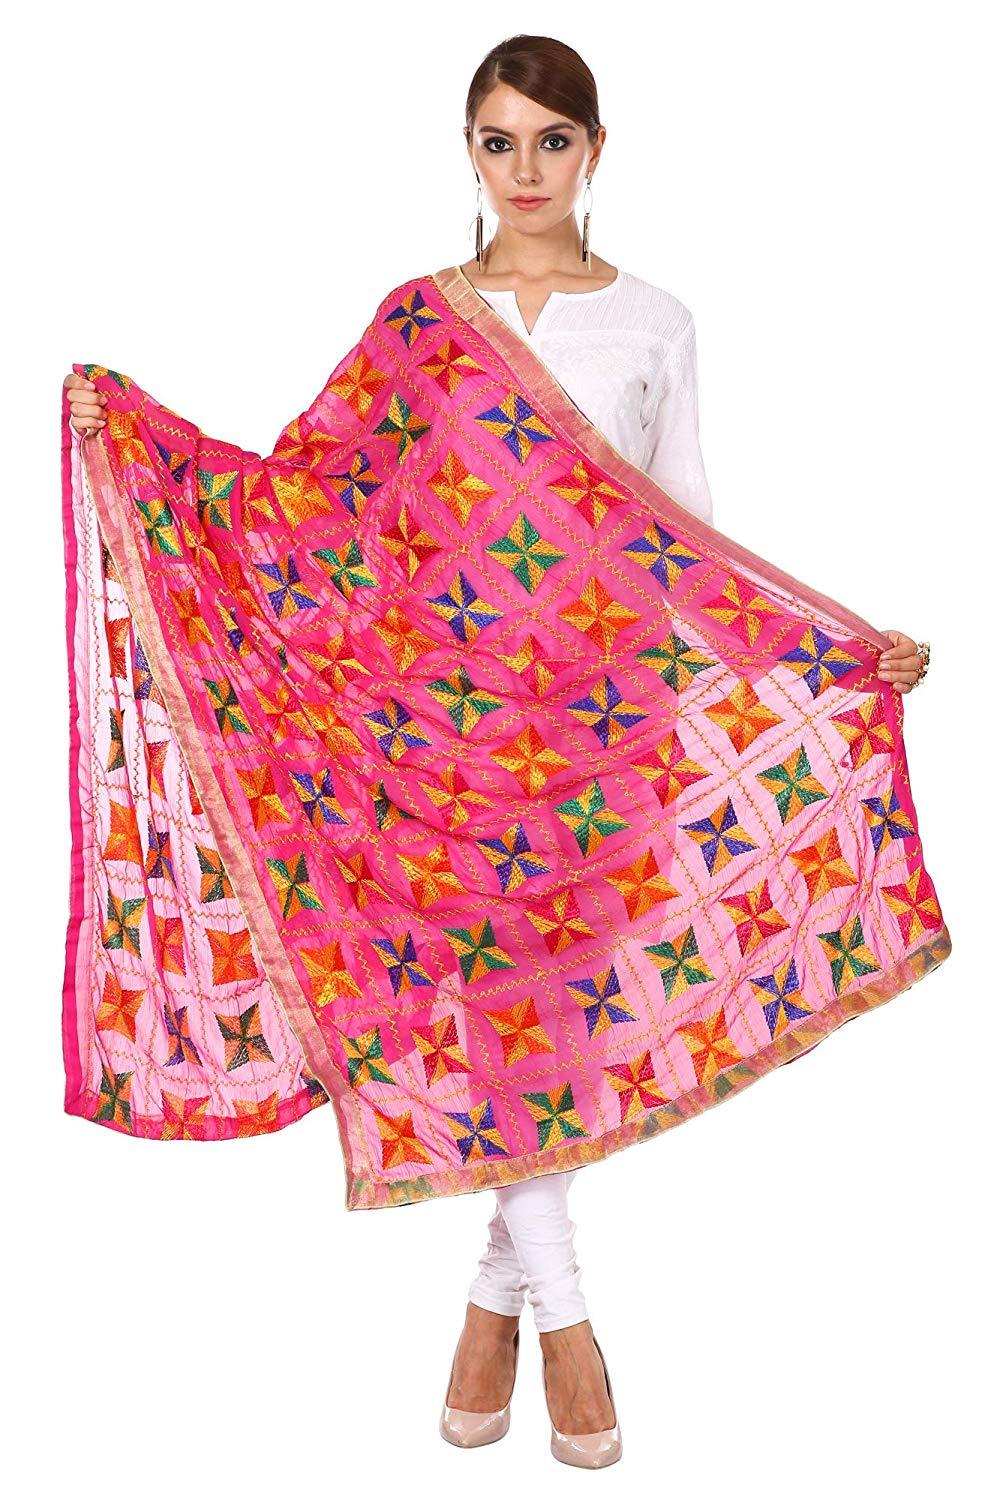 Pashtush Womens Chiffon Dupatta With Multicoloured Embroidery, Light Weight, Hot Pink